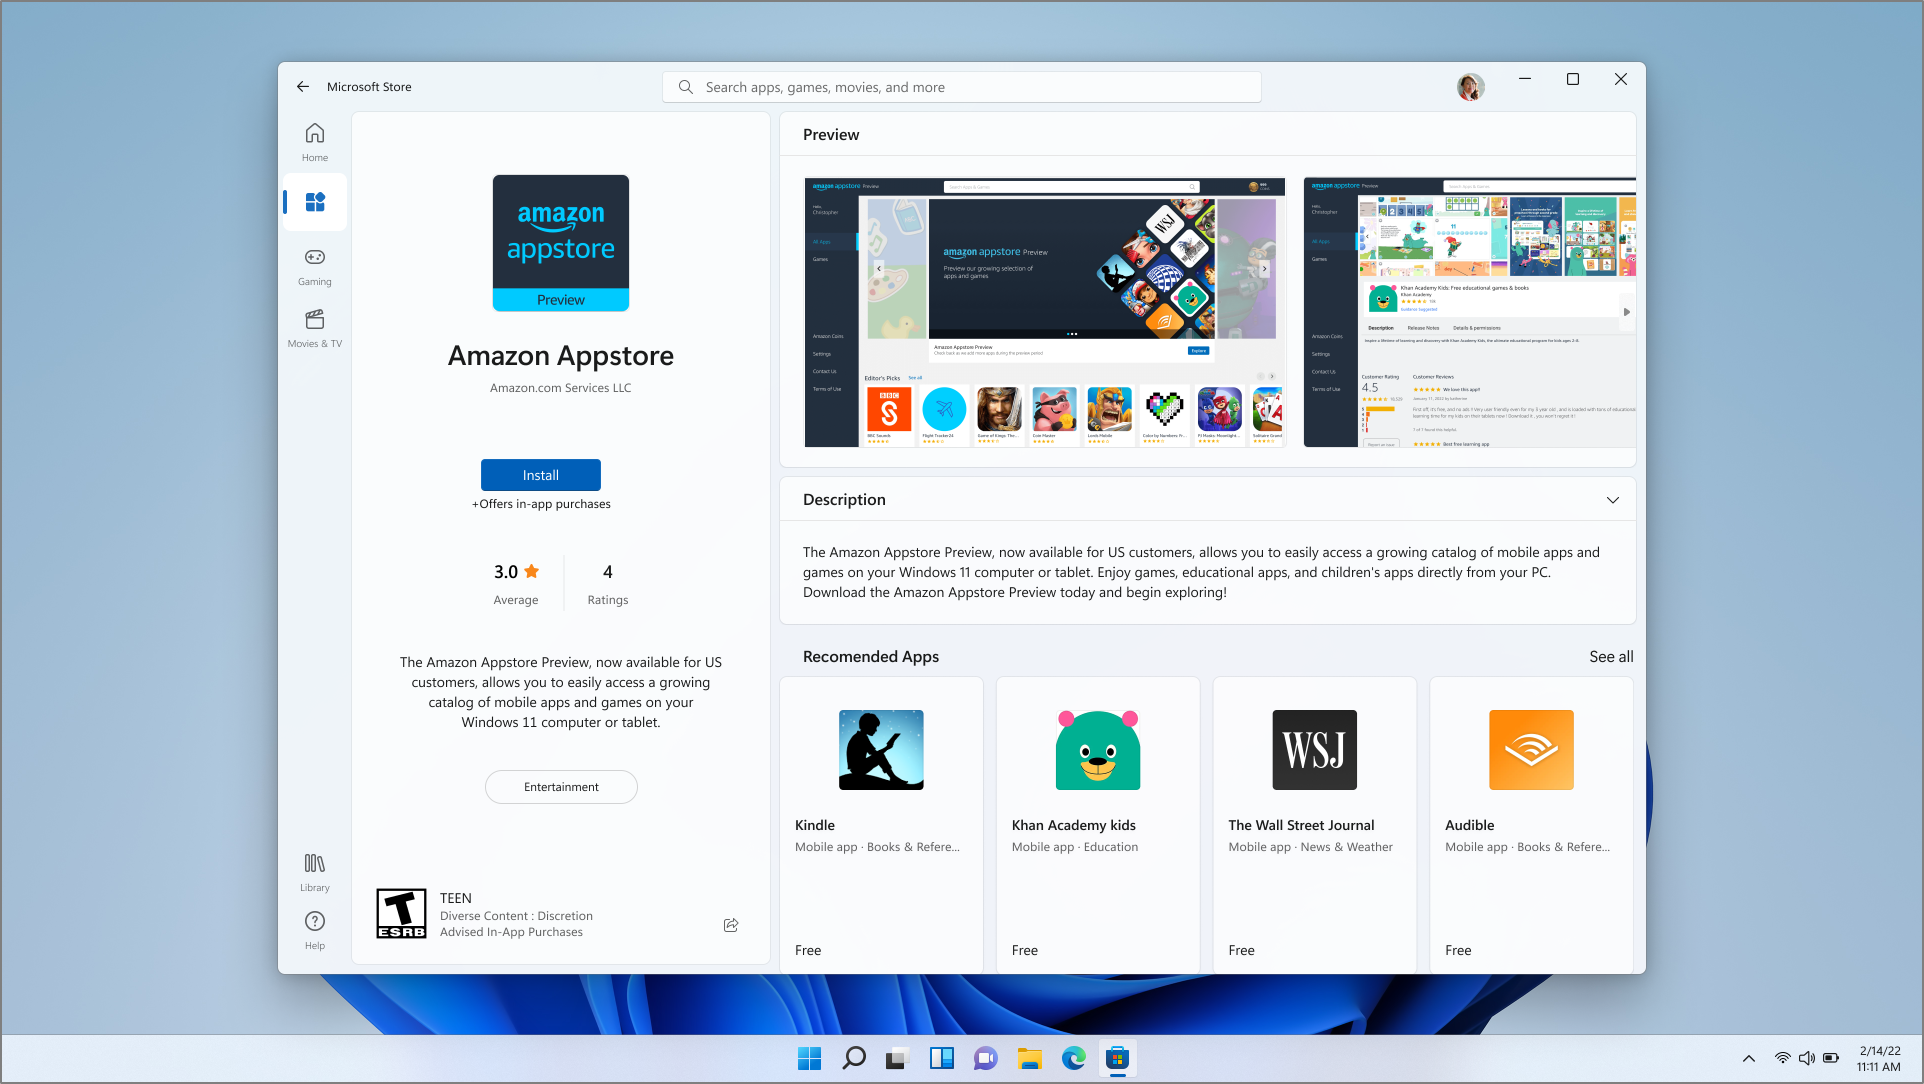 Fresh! Microsoft Store Hadirkan New UI, Lebih Menarik Lho